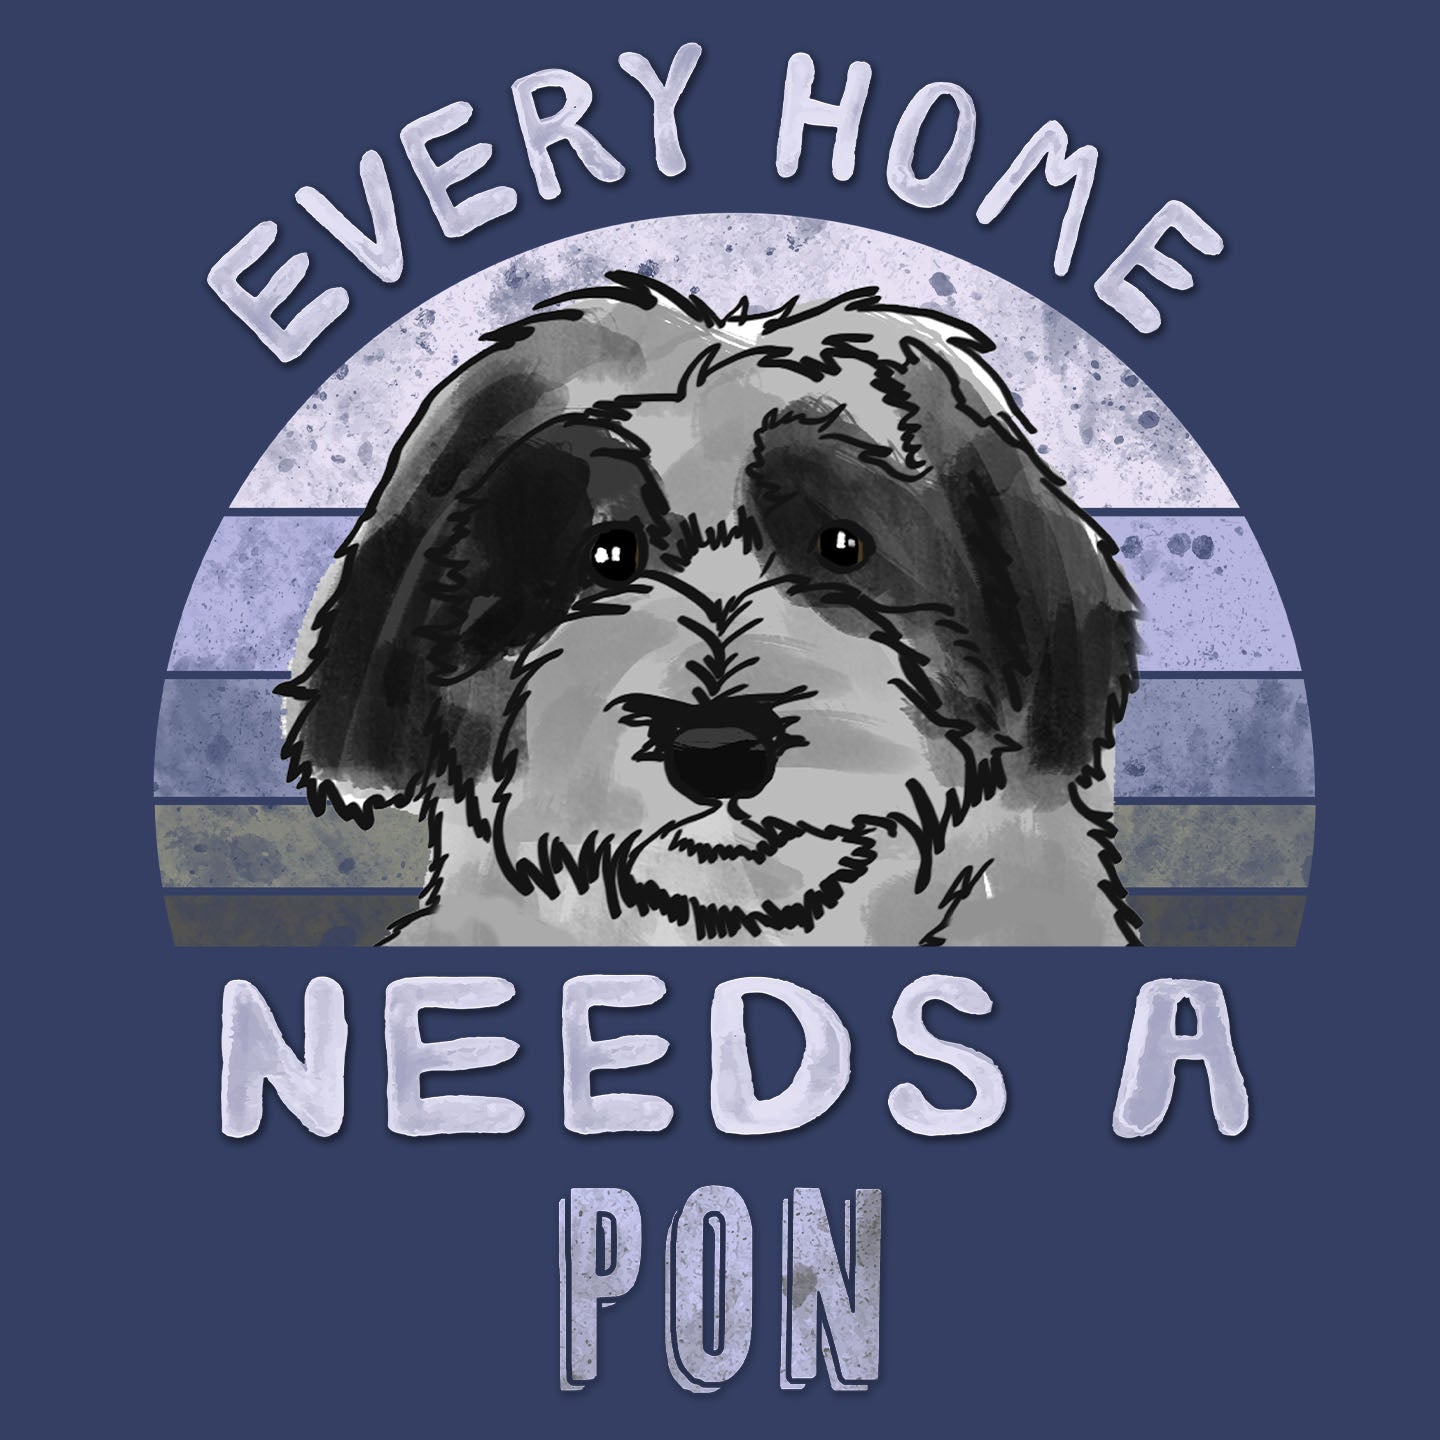 Every Home Needs a Polish Lowland Sheepdog - Adult Unisex Crewneck Sweatshirt